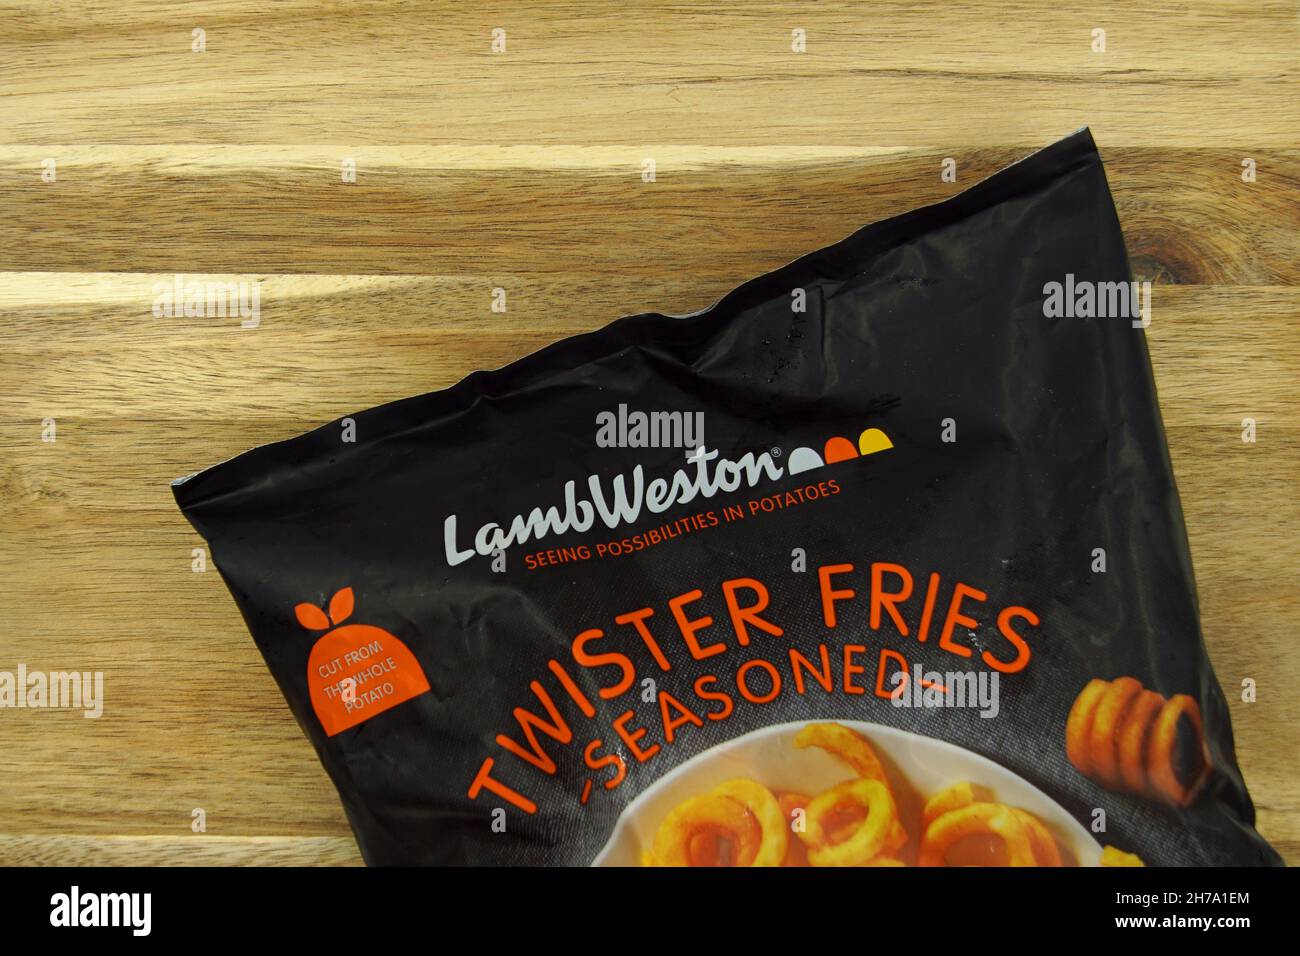 Zaandam, the Netherlands - November 21, 2020: Package of Lamb Weston Twister Fries on a kitchen table. Stock Photo